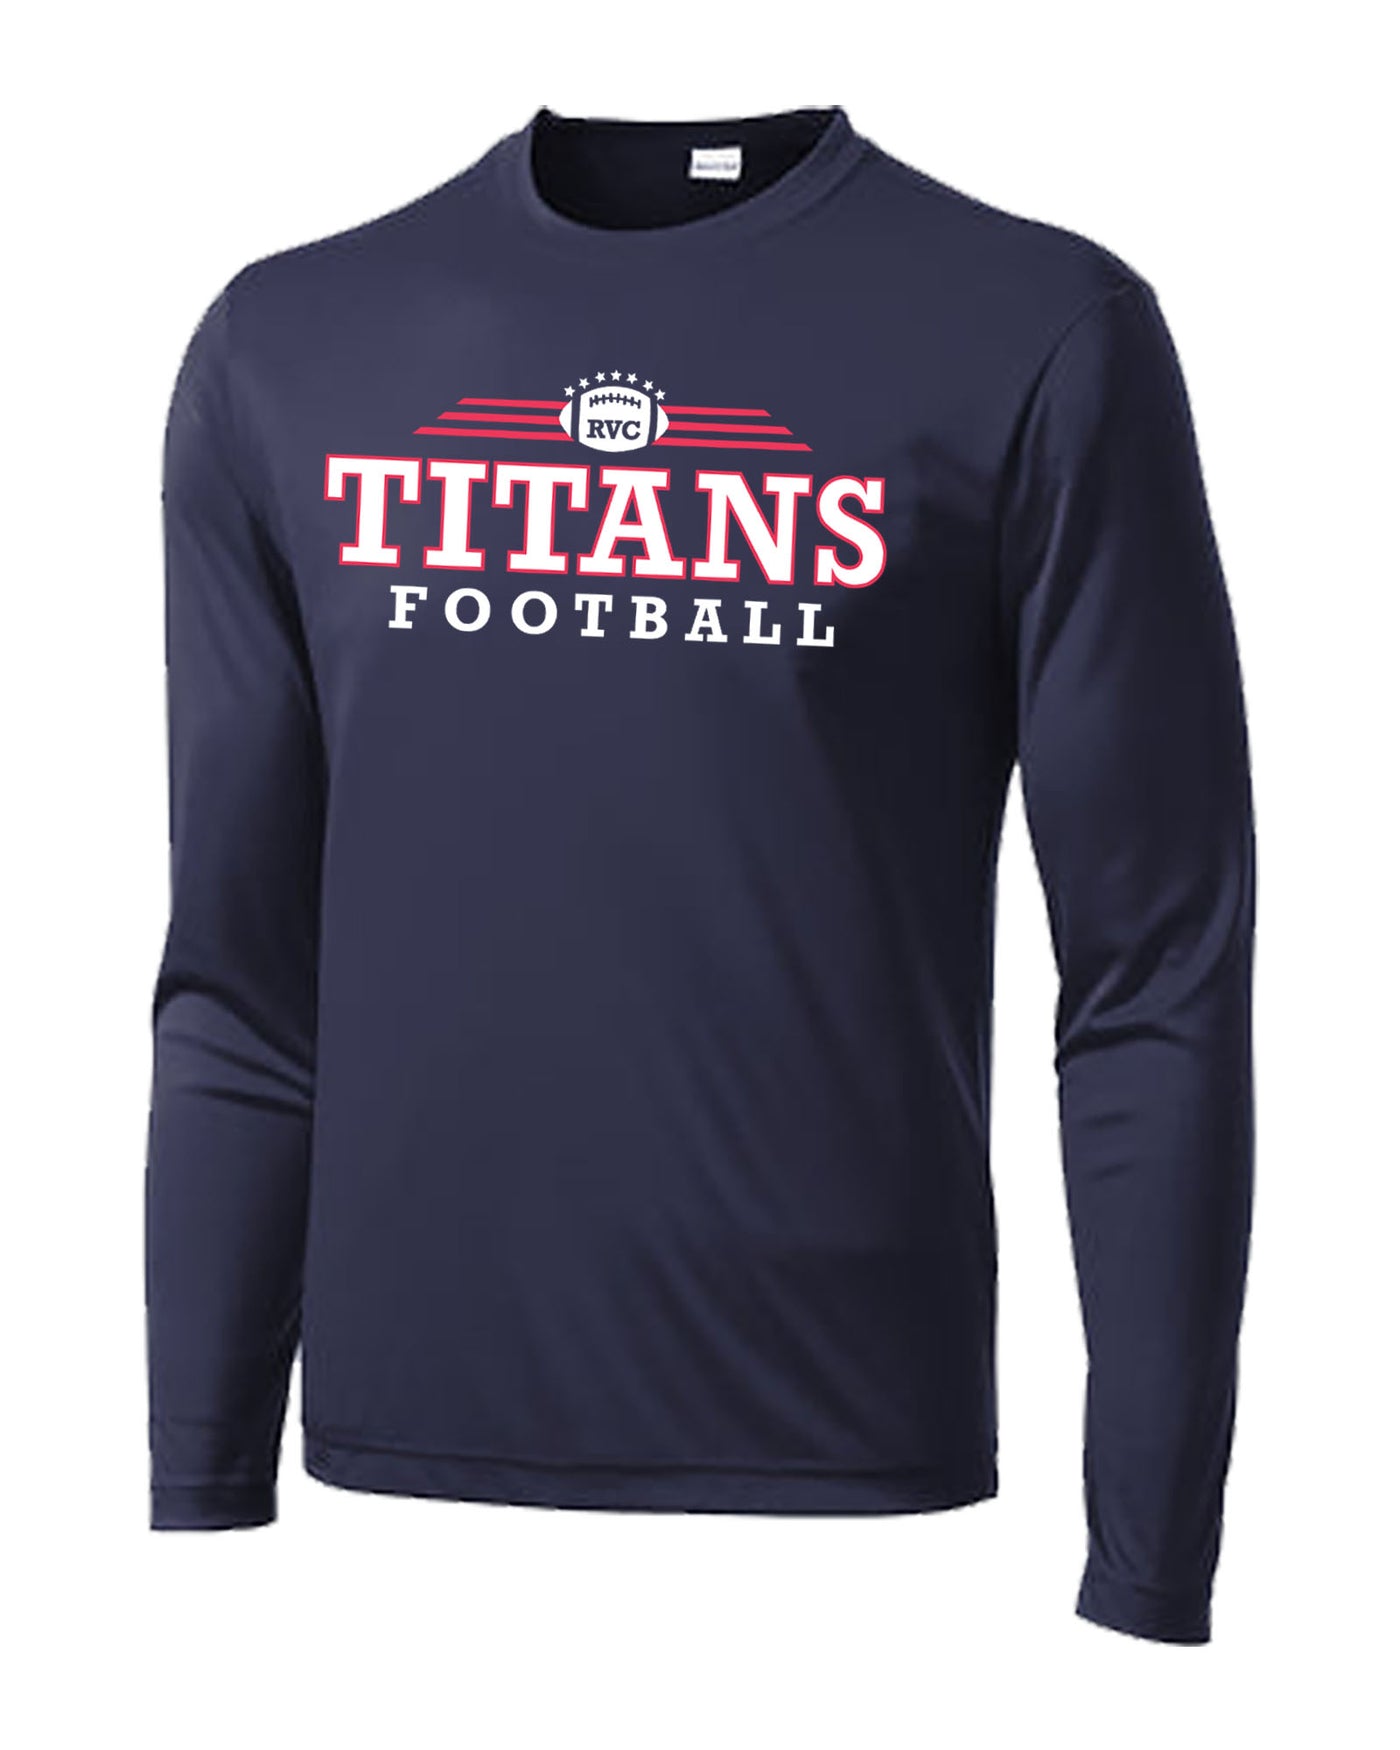 Titans Gameday Long Sleeve Moisture Wicking Performance T Shirt